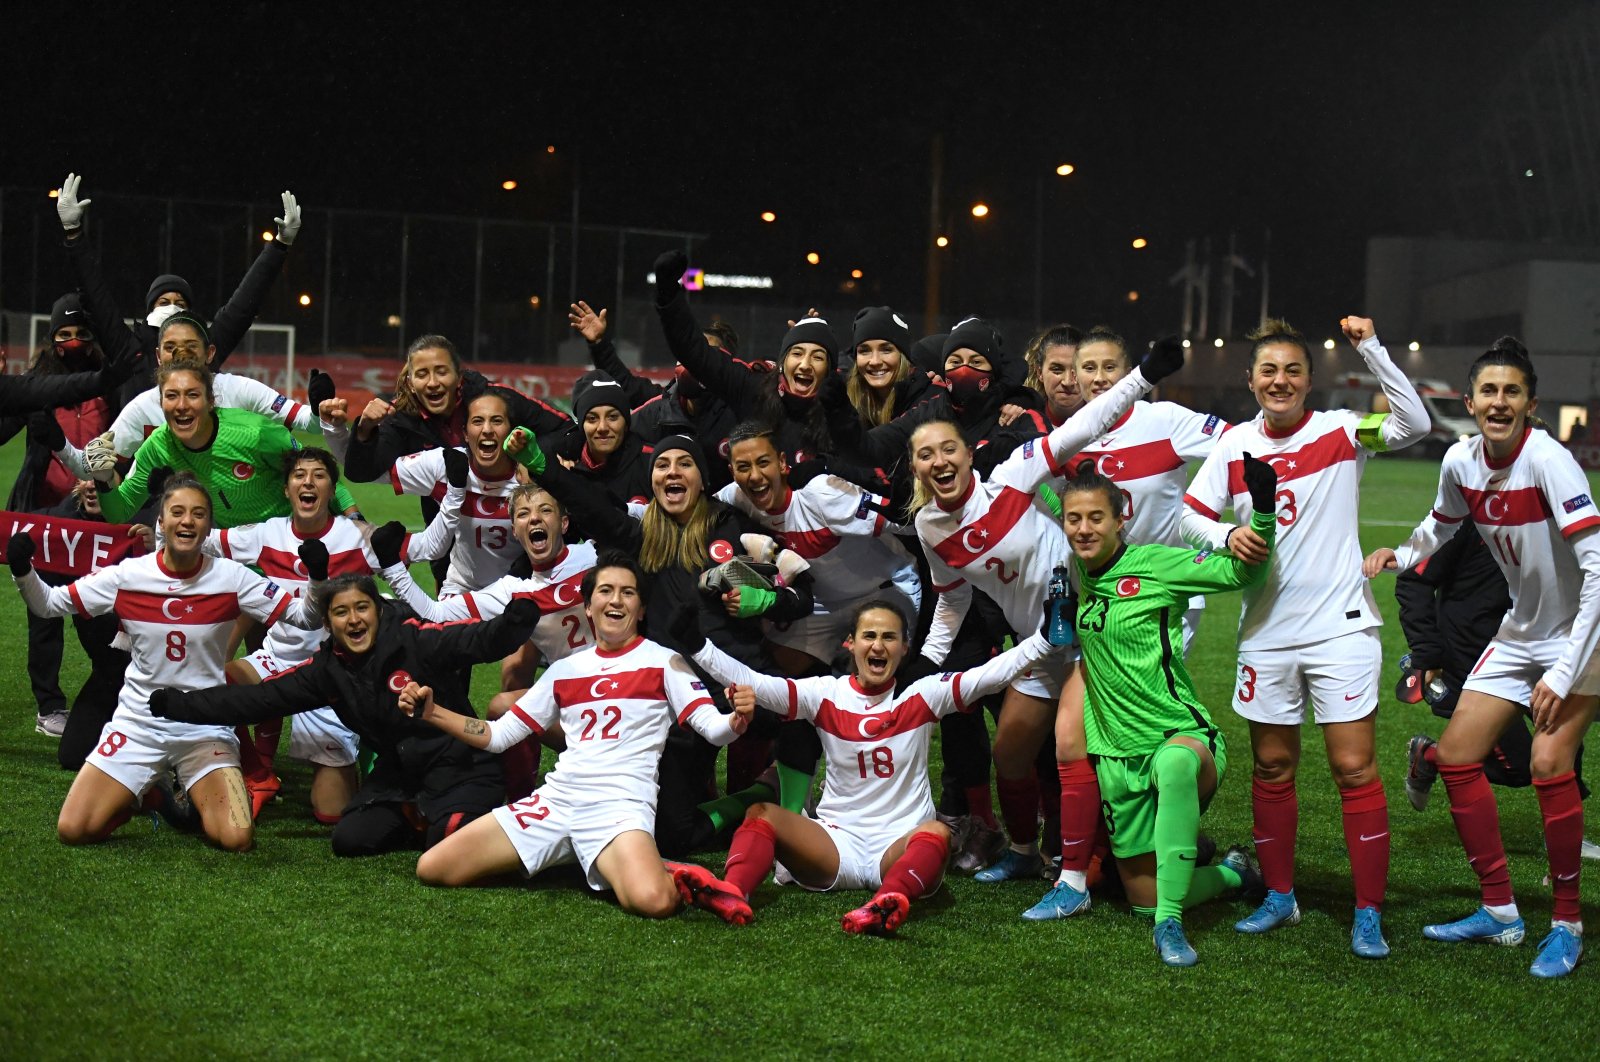 The Turkish women's national team celebrates a victory against Estonia, in Tallinn, Estonia, Nov. 27, 2020. (IHA Photo)